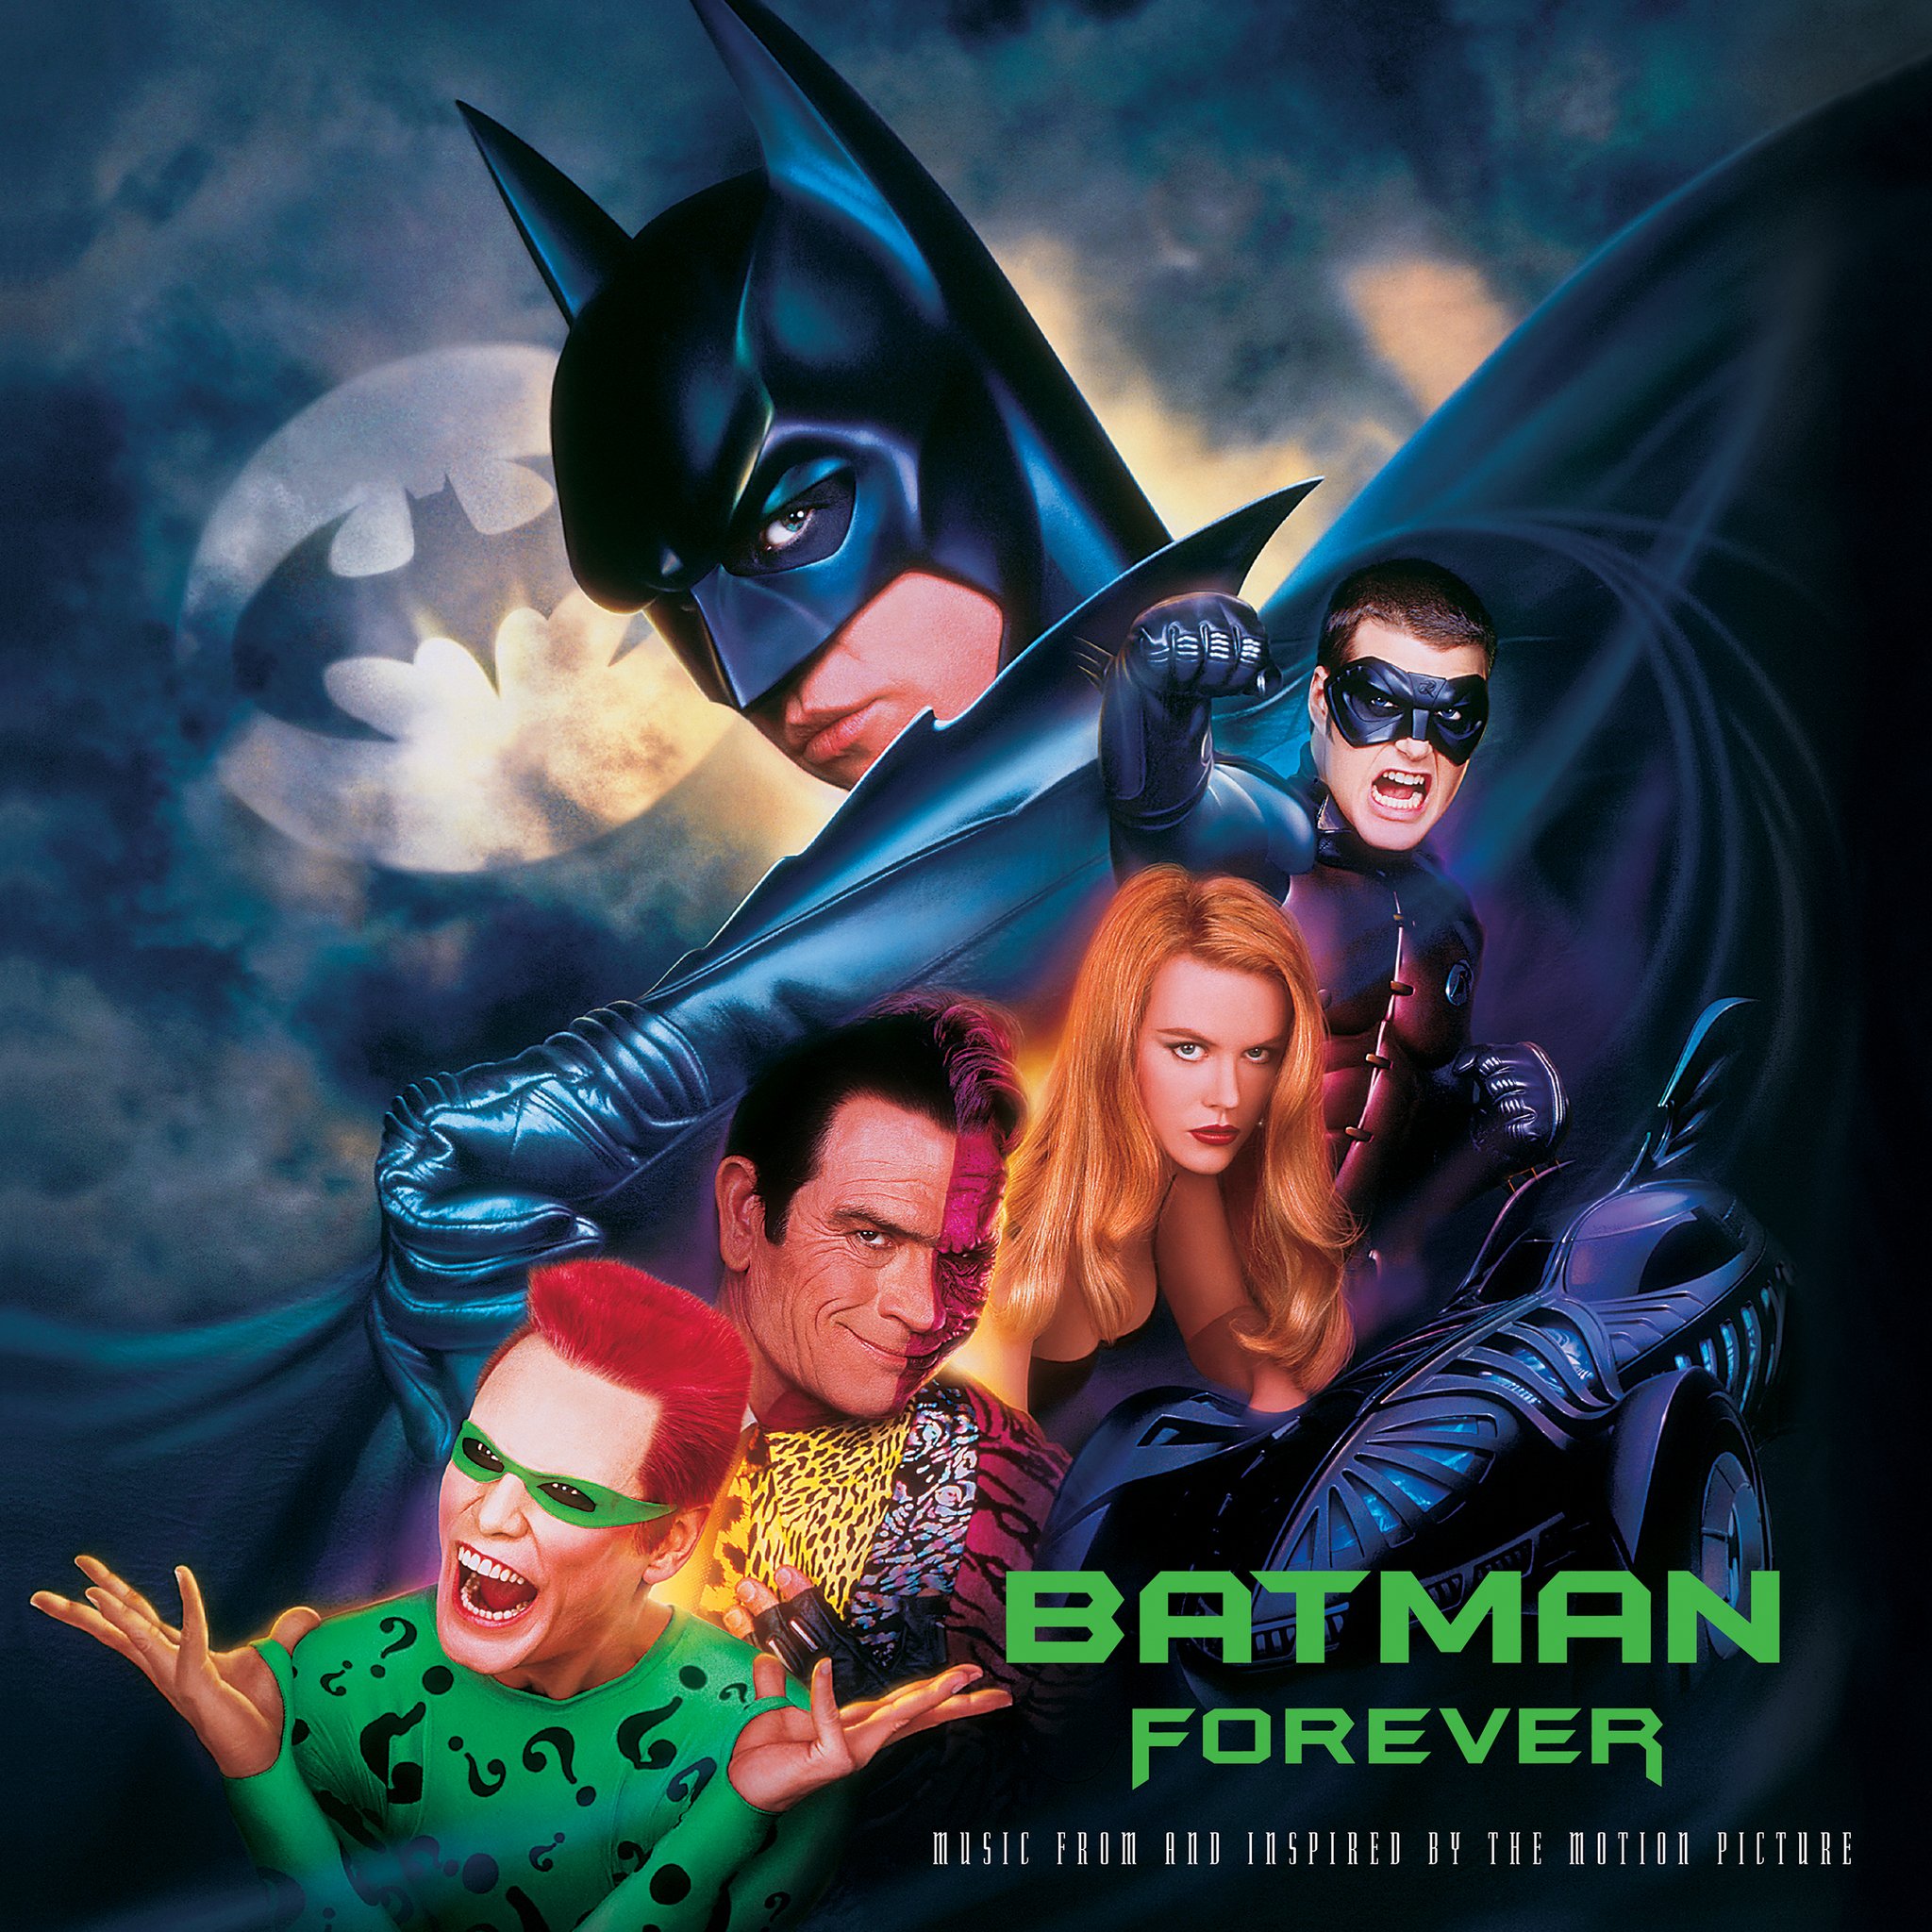 The best superhero movie soundtracks, from 'Batman' to 'Birds of Prey